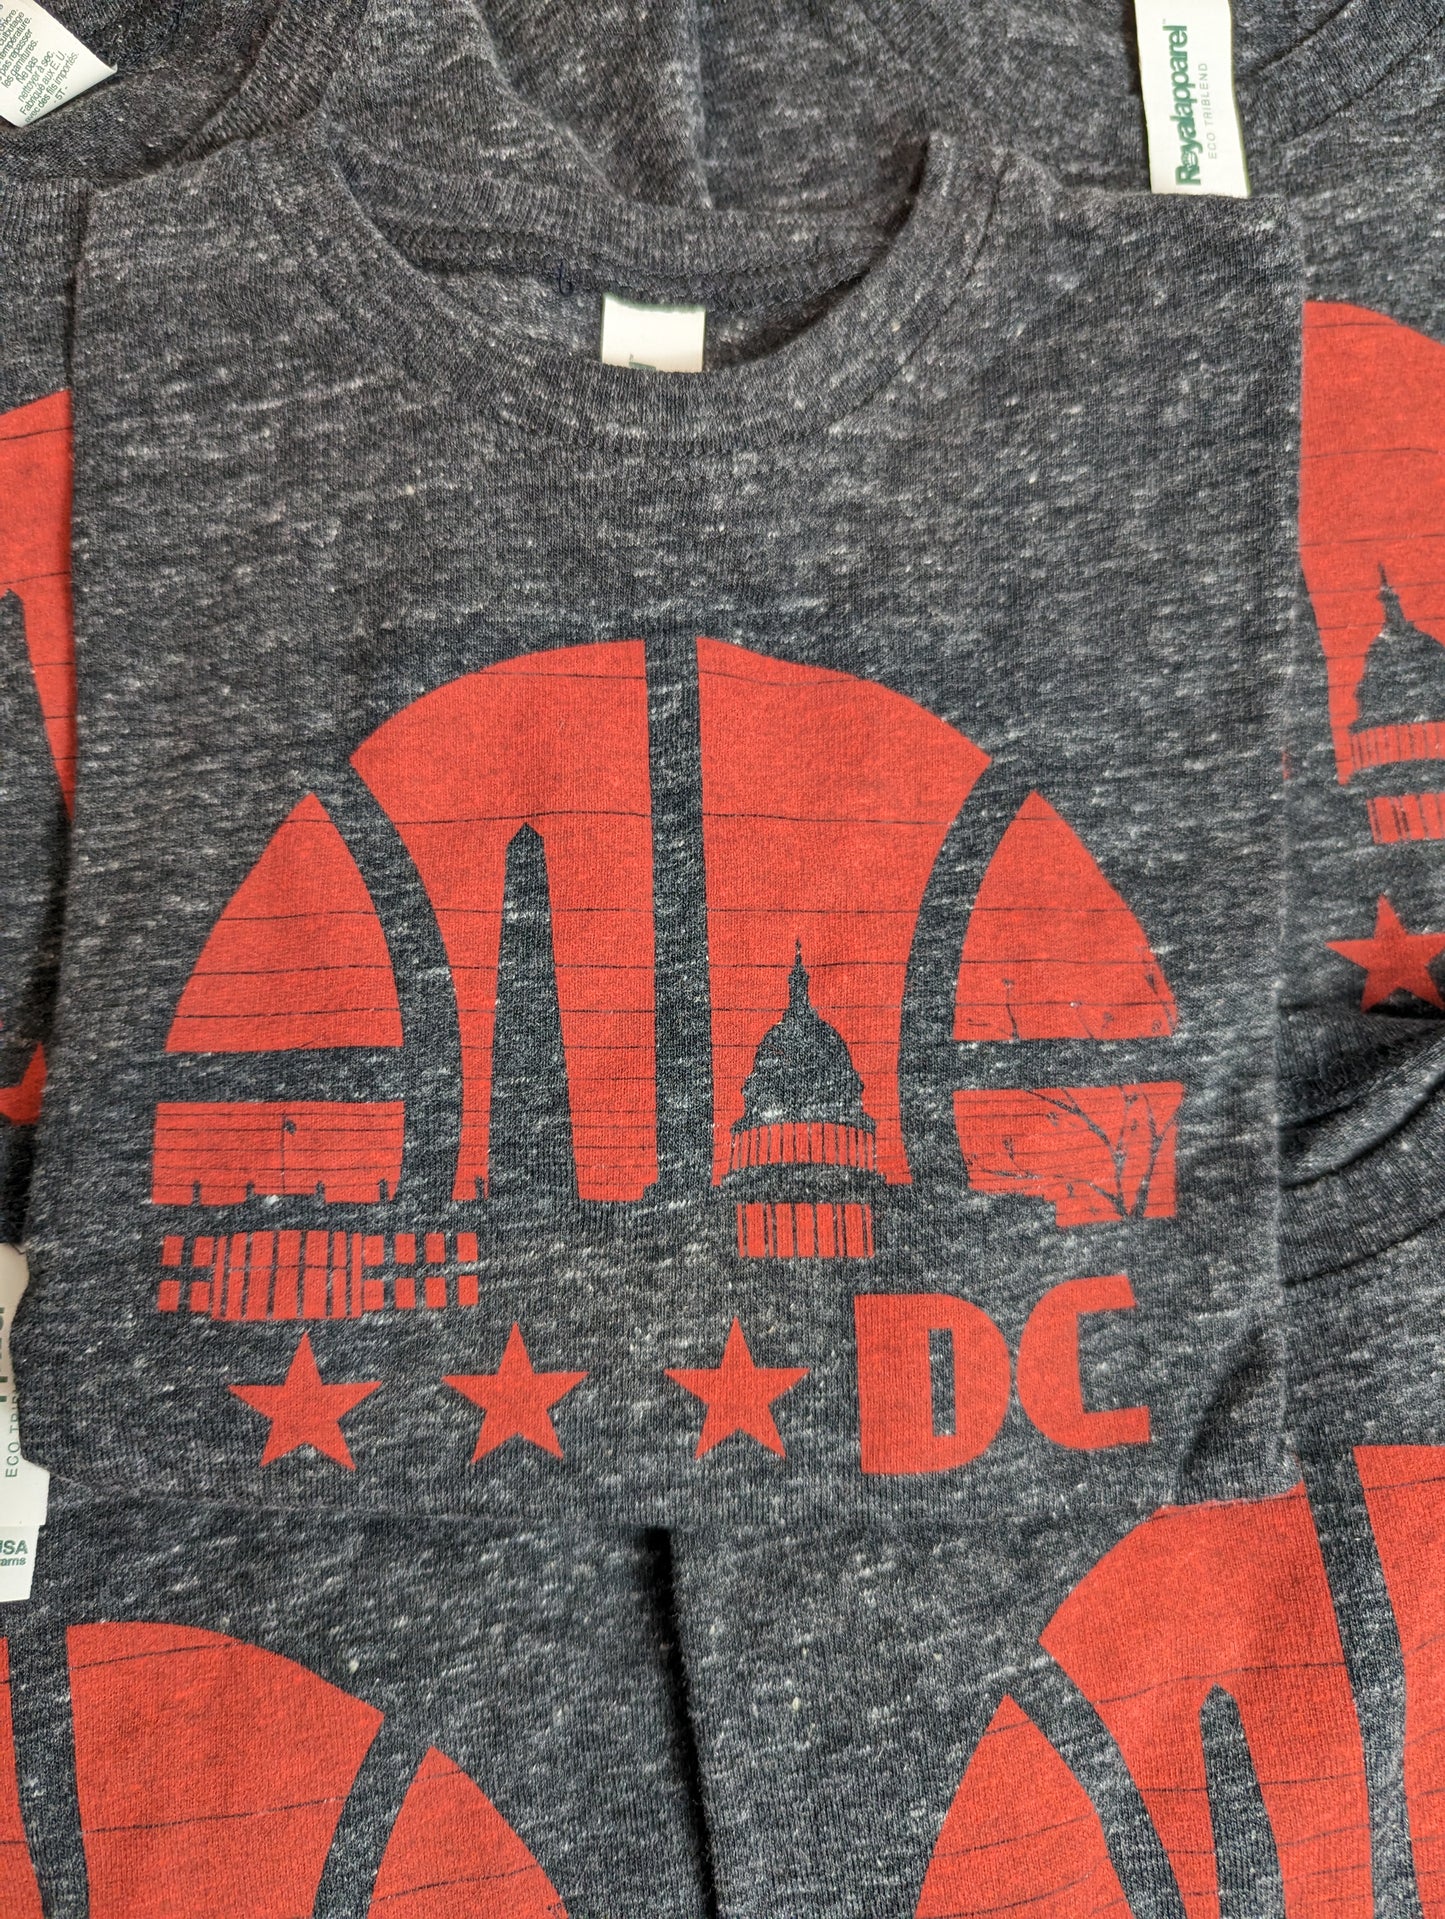 Washington DC Basketball City Toddler T-shirt